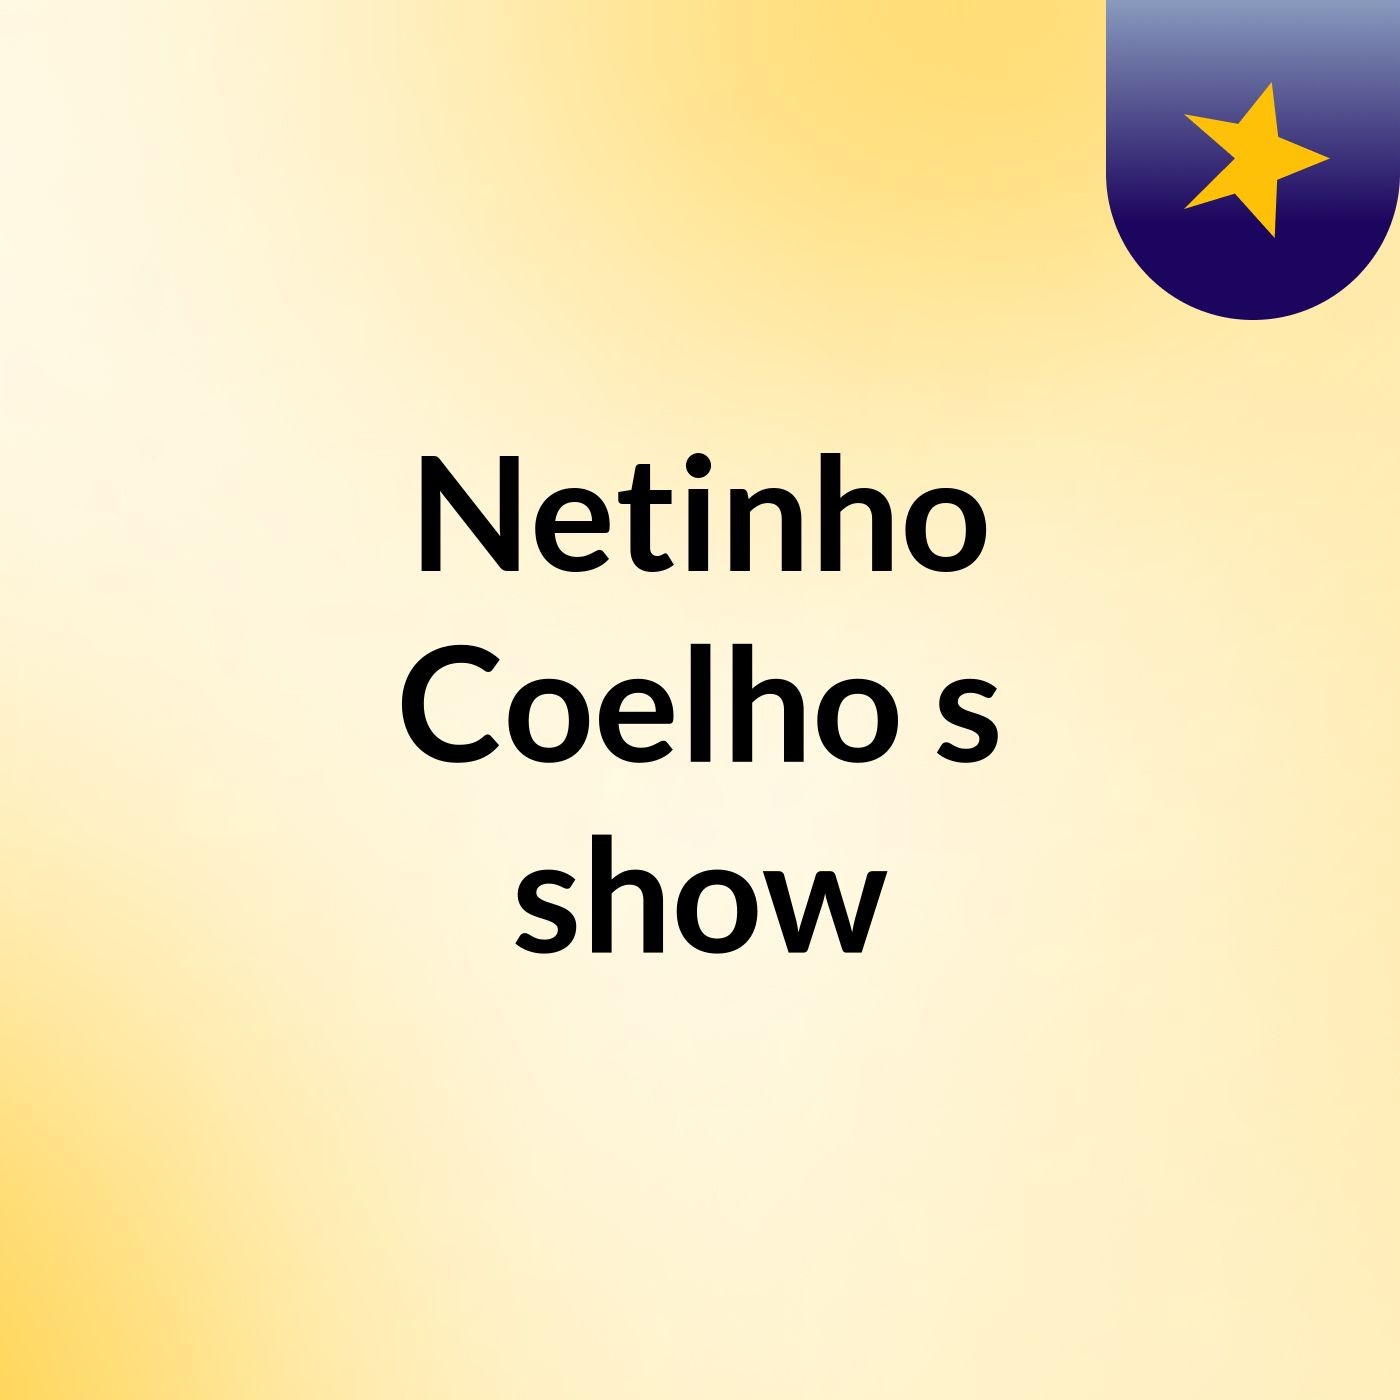 Netinho Coelho's show